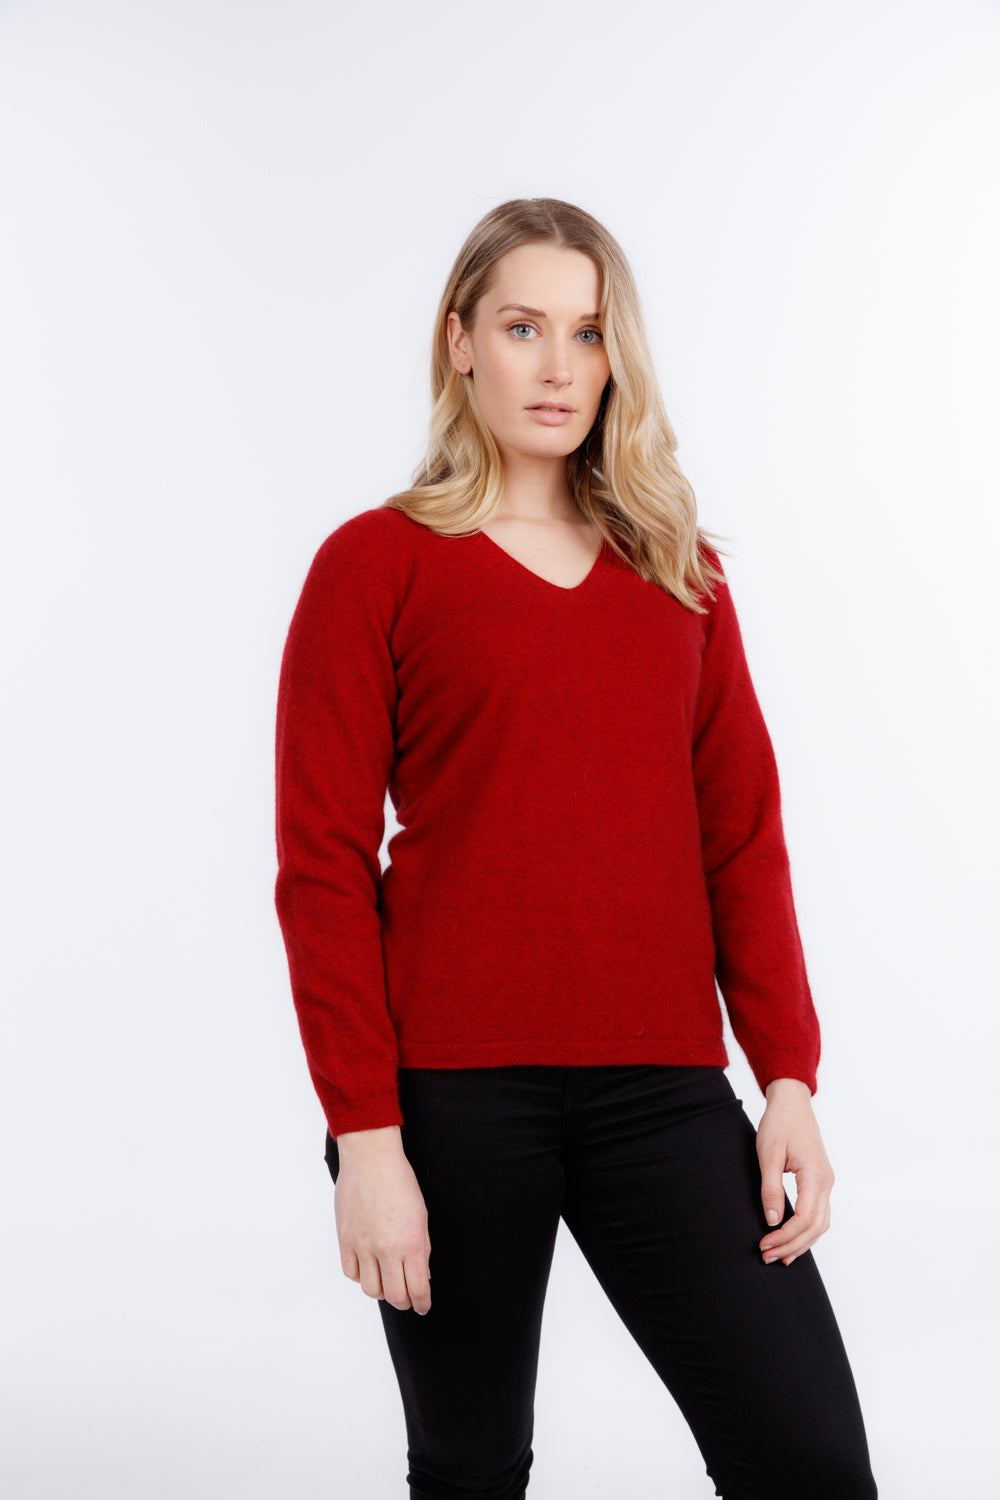 Womens Vee Neck Plain Sweater